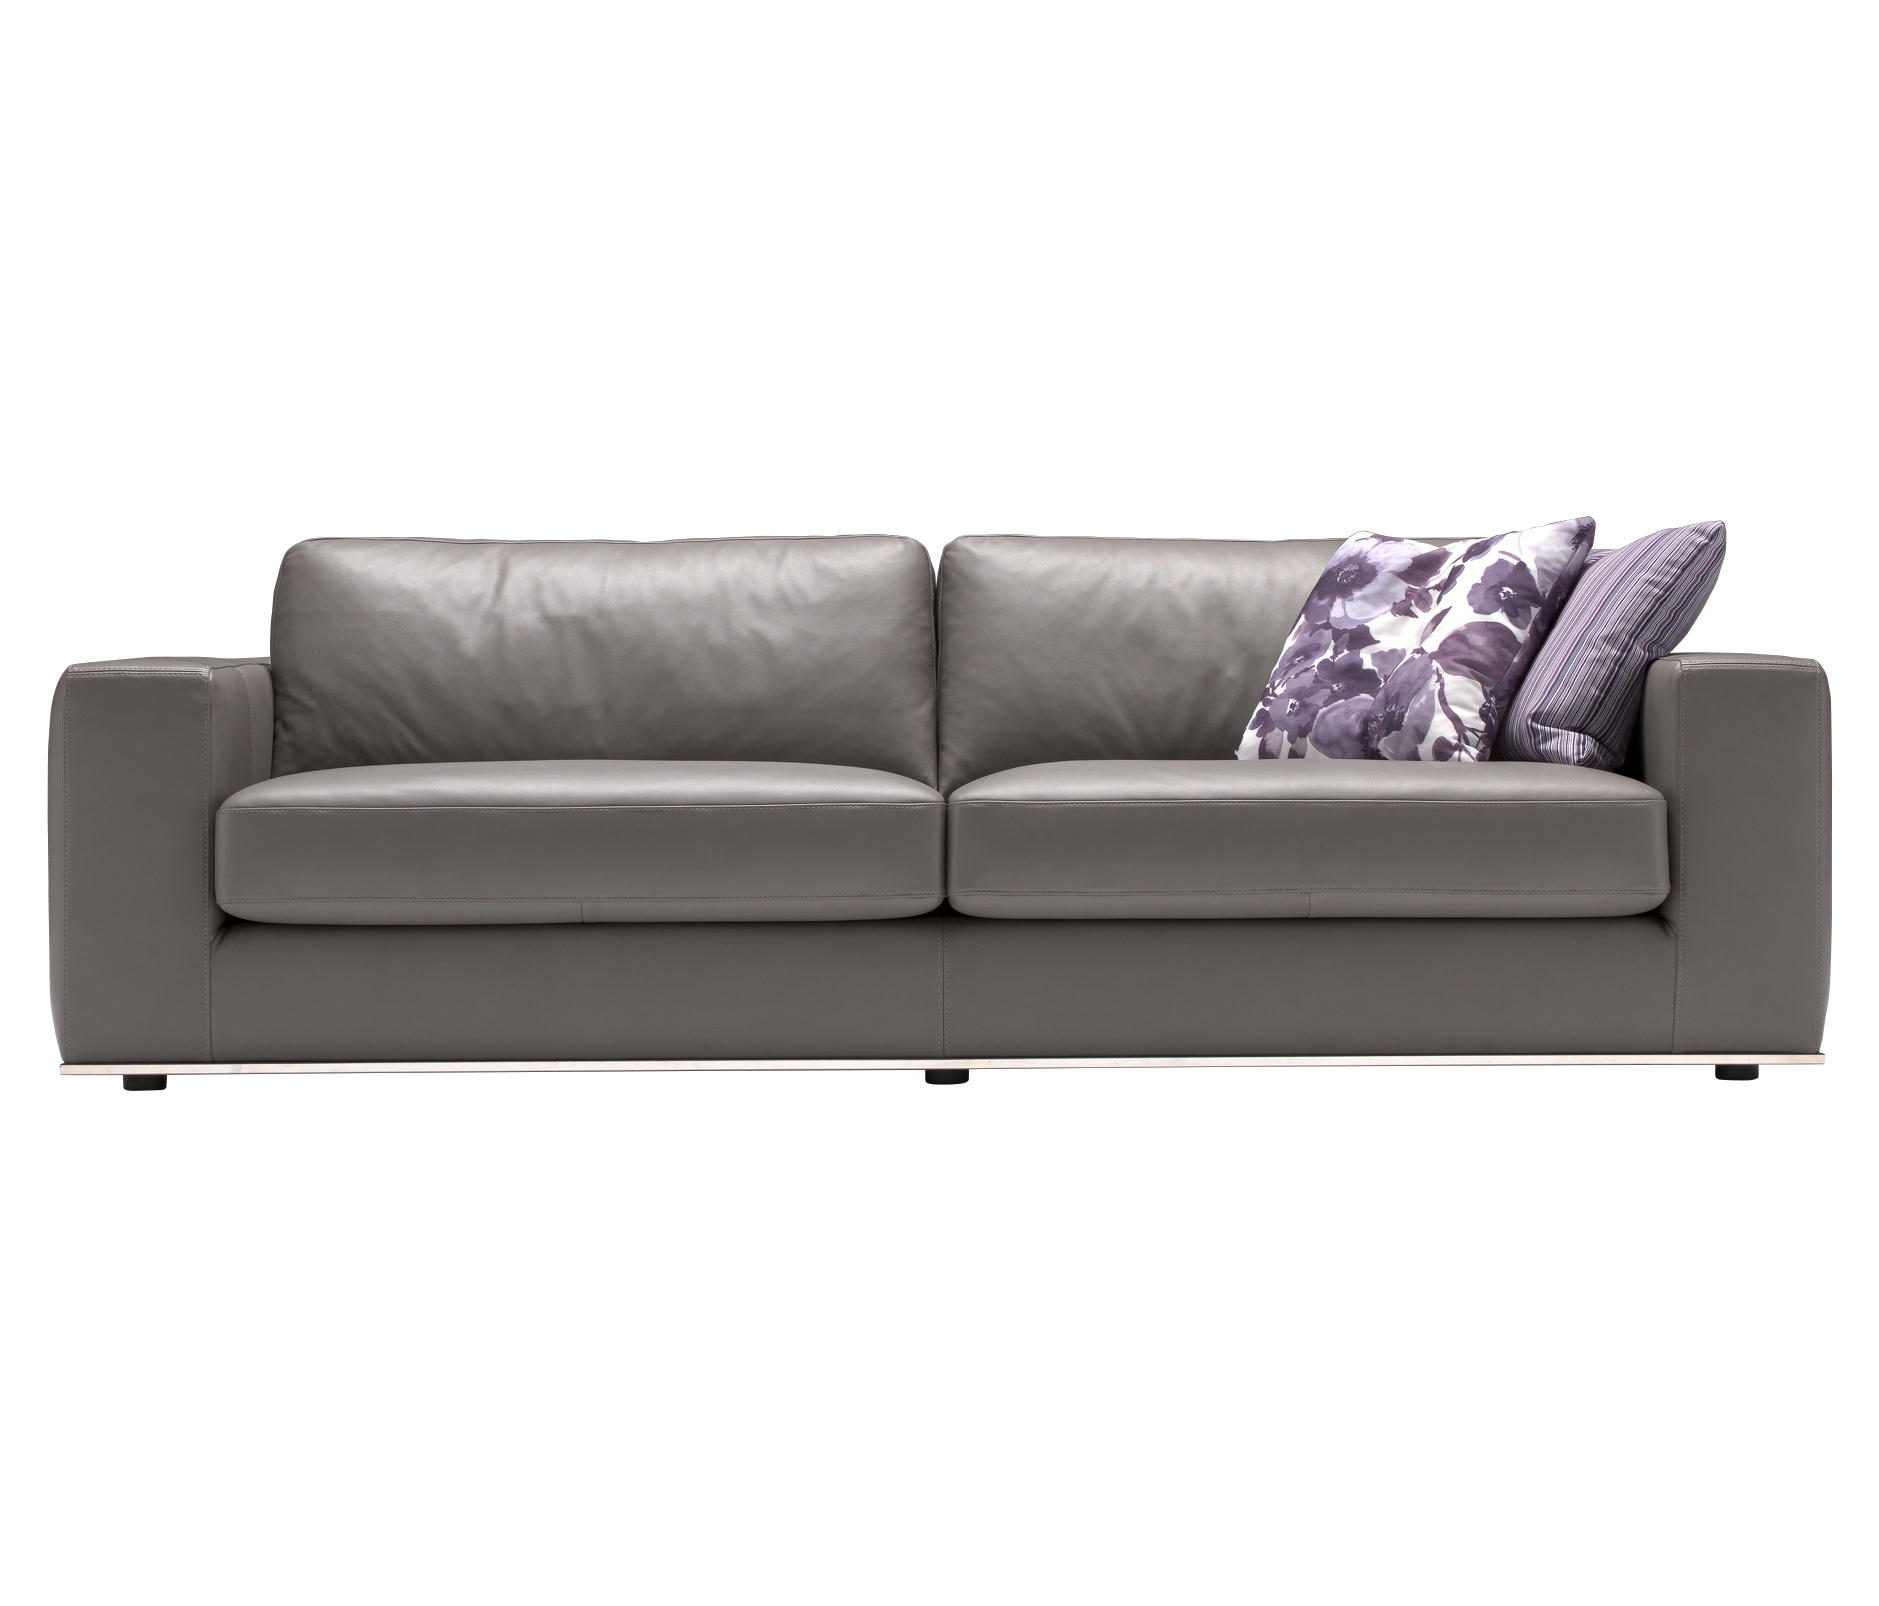 Dalton sofa leather & designer furniture | Architonic